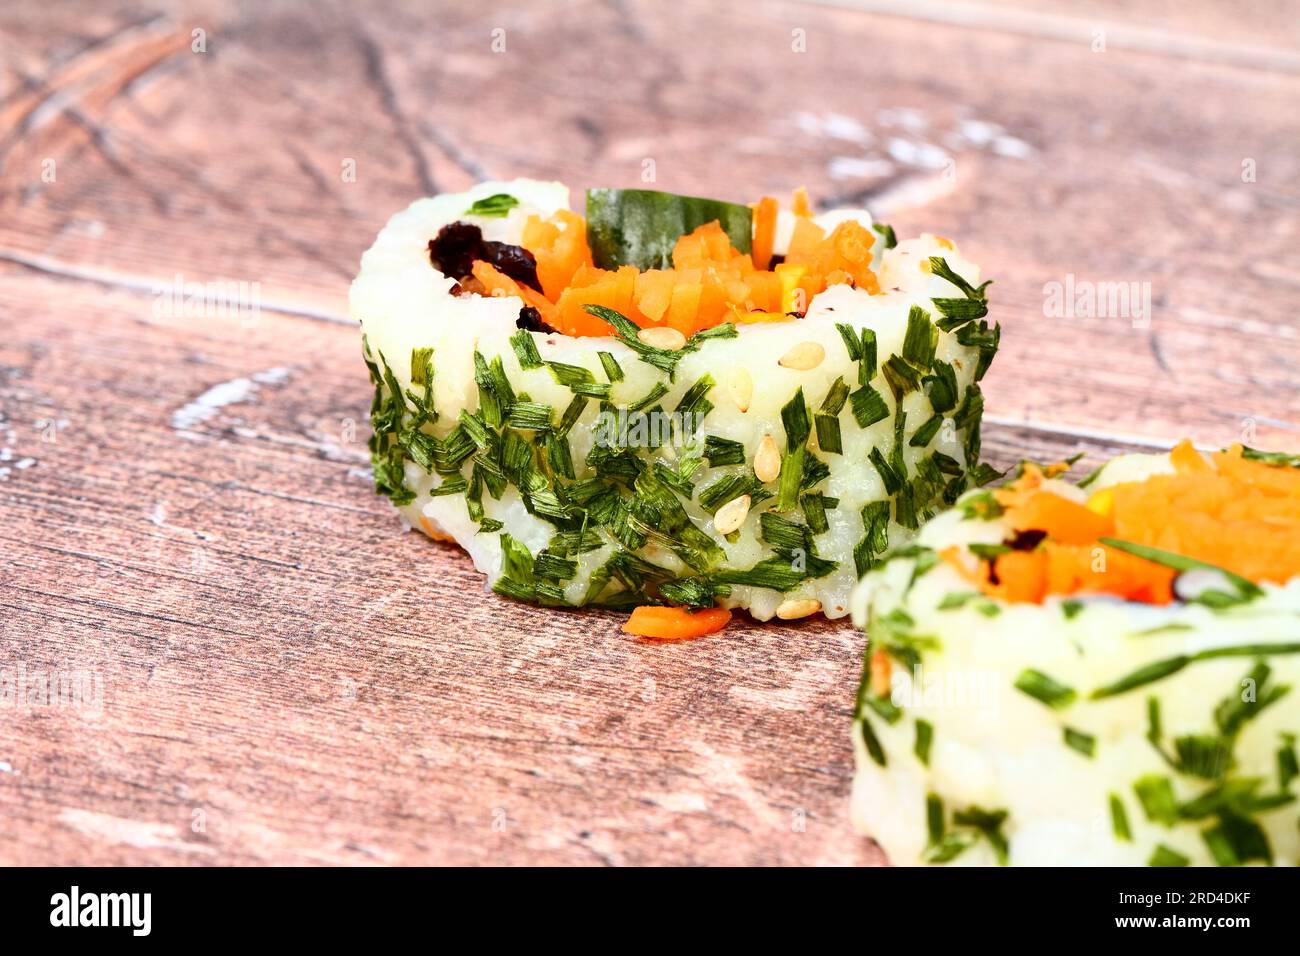 Vegan Sushi rolls on a wood table Stock Photo